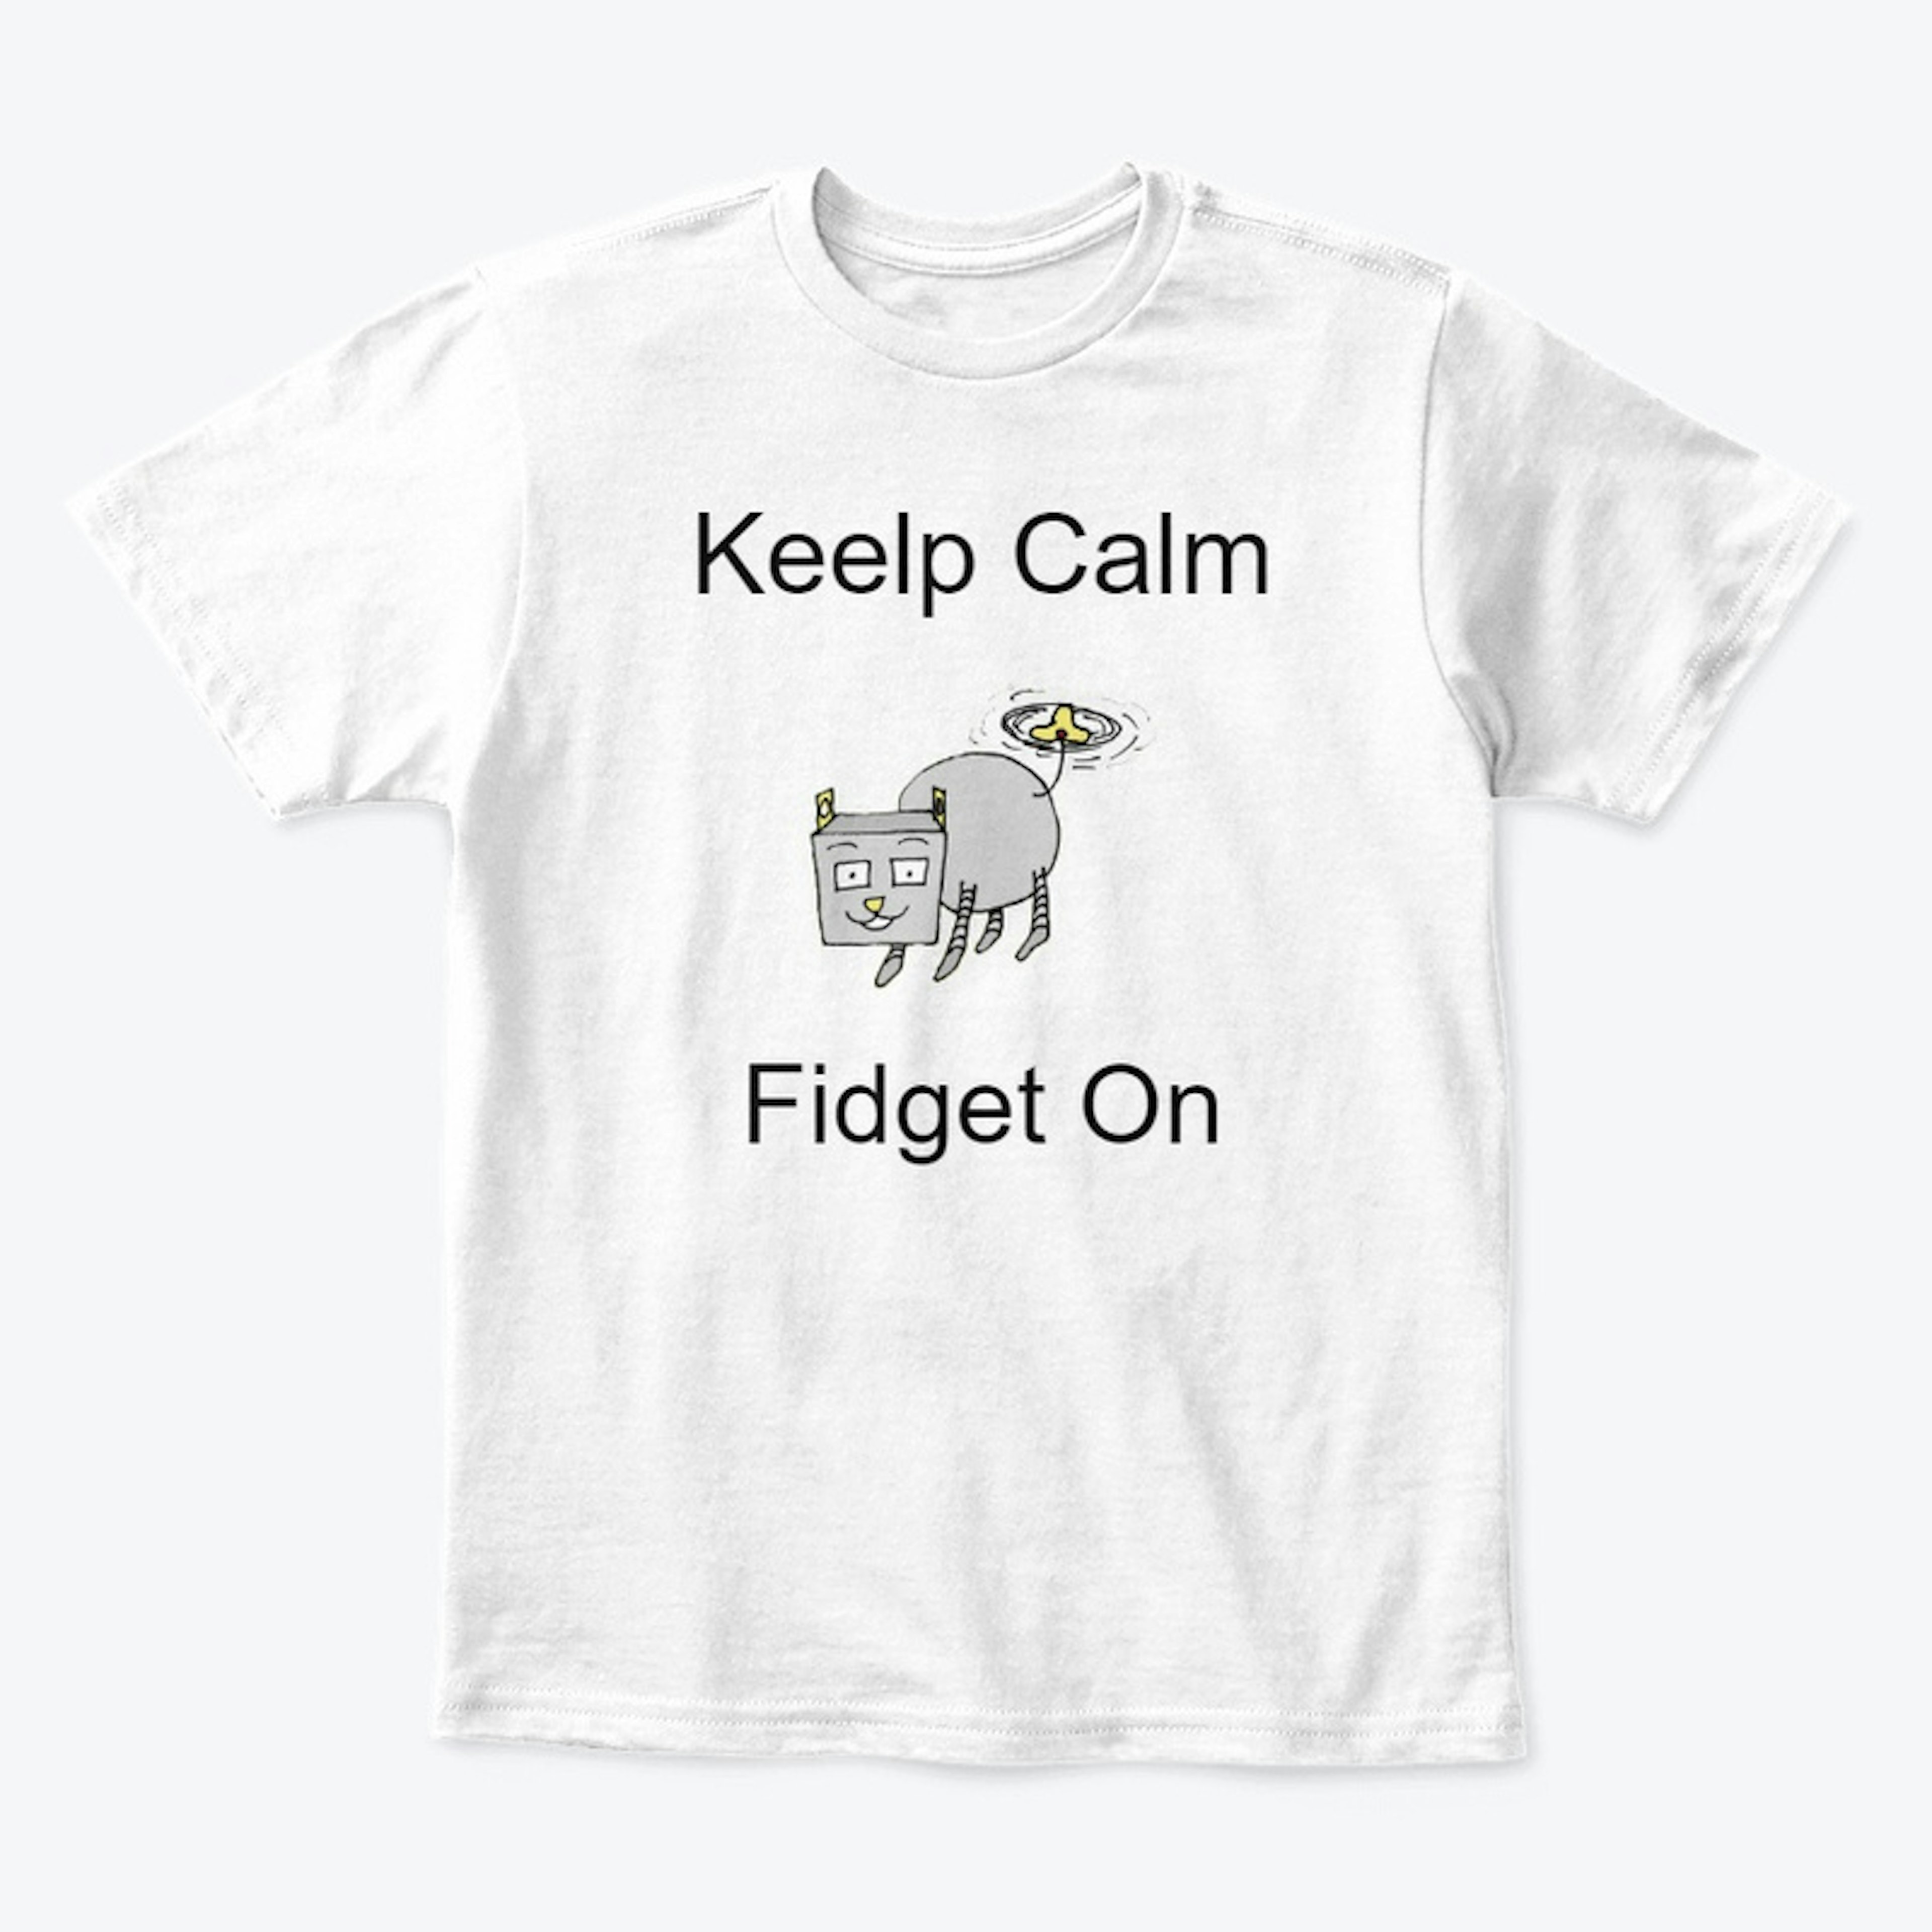 Keep Calm and Fidget on